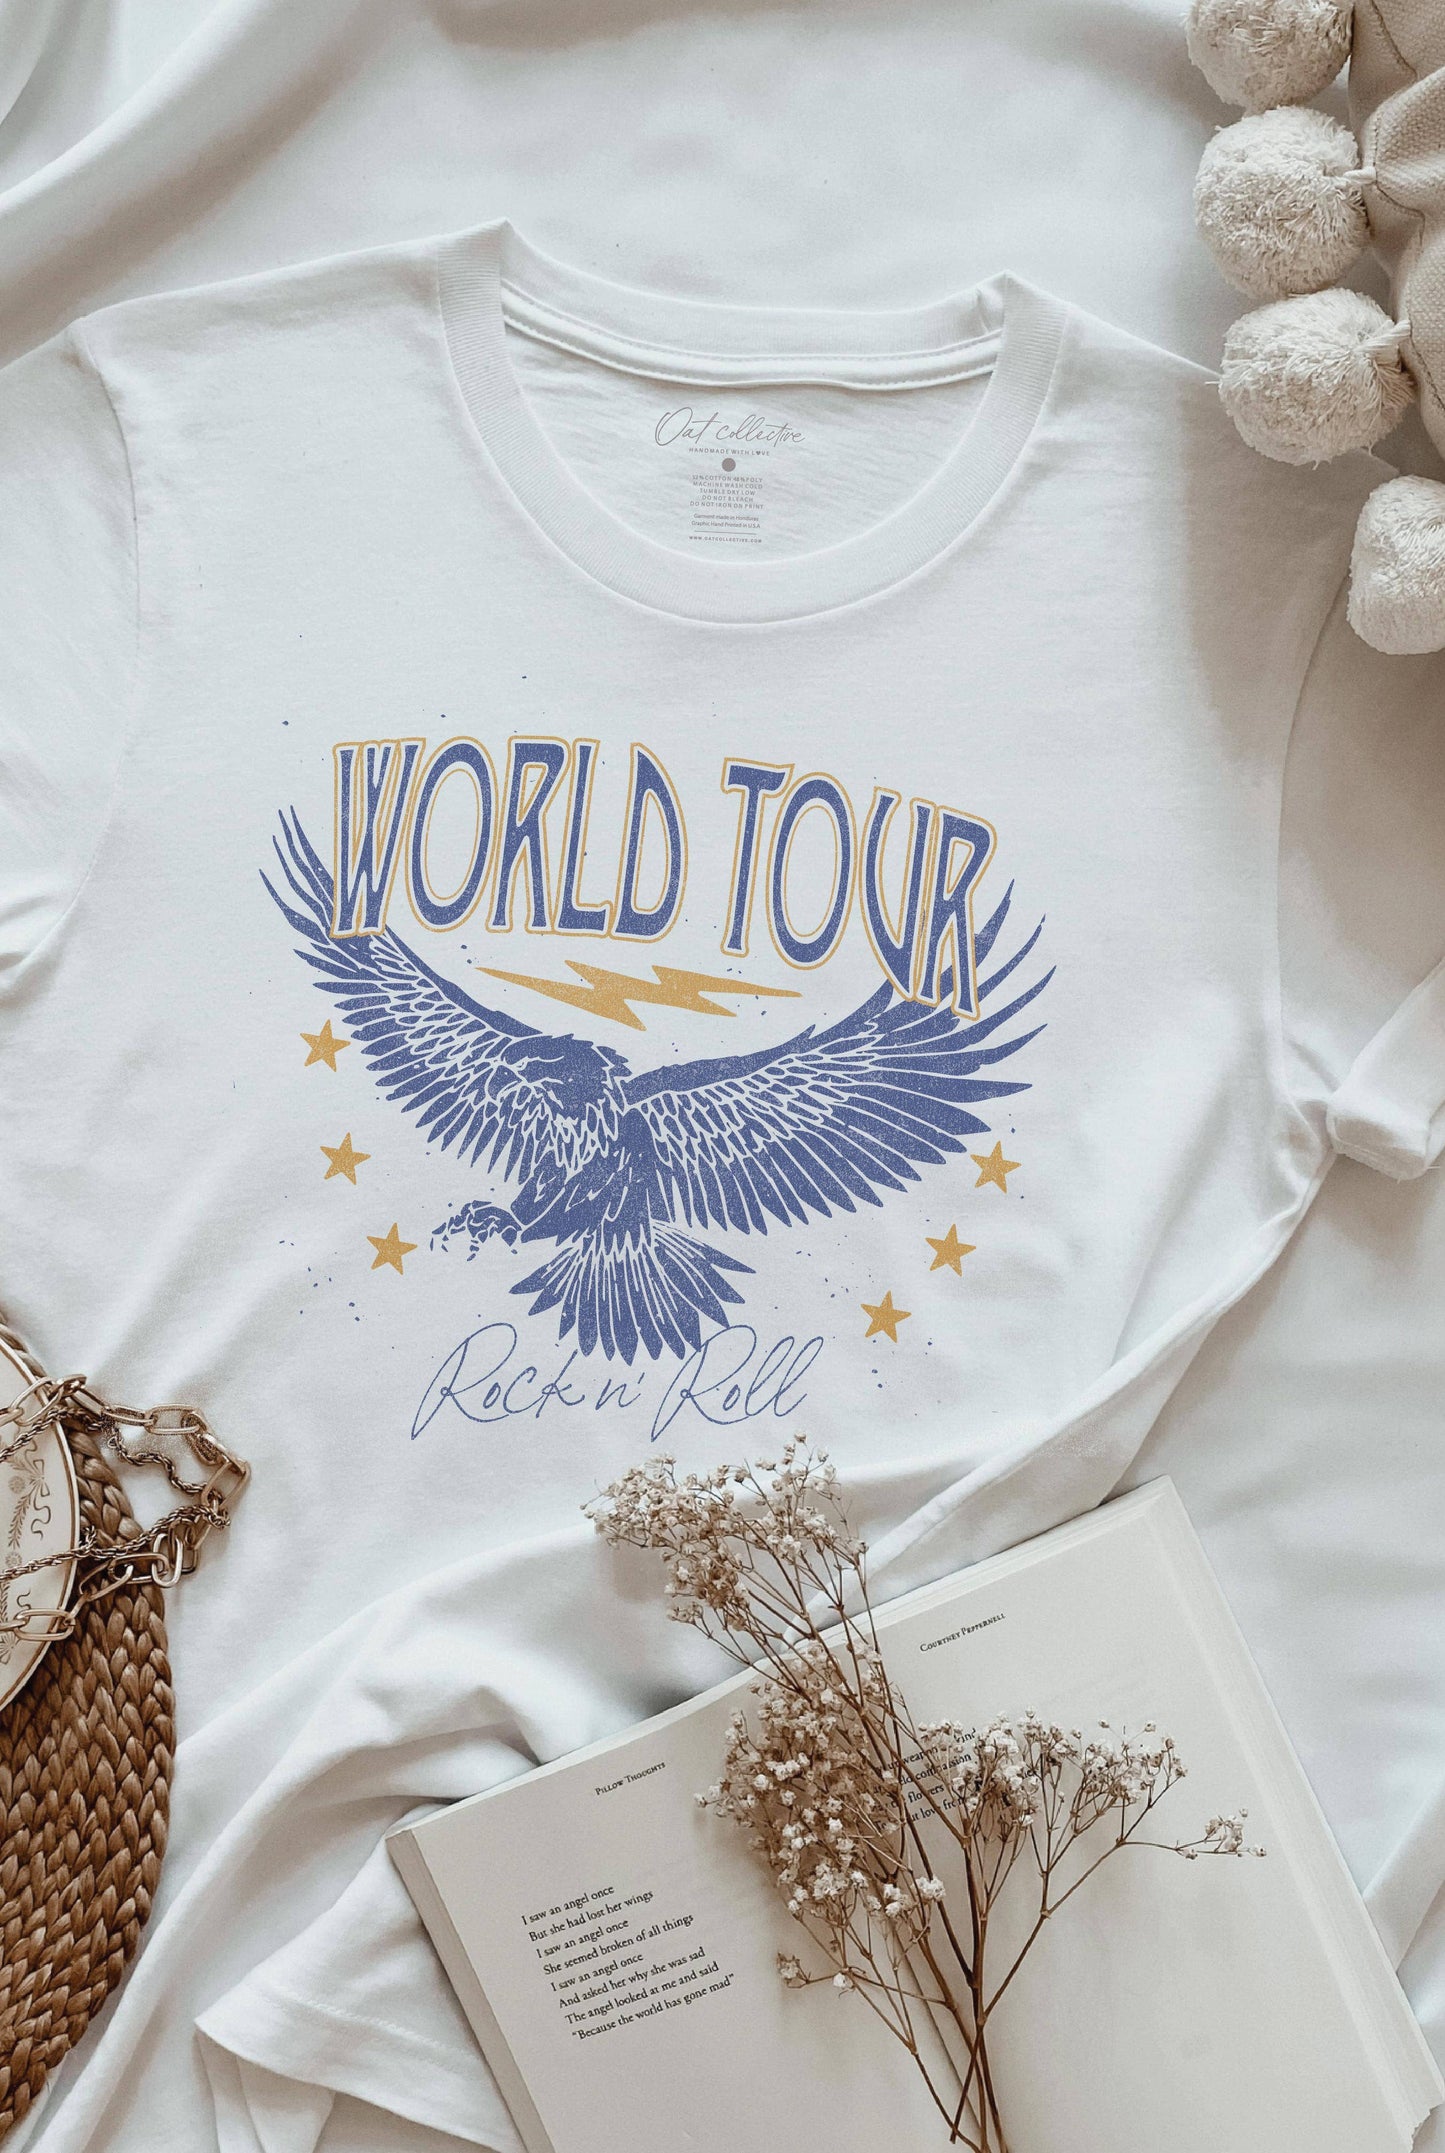 WORLD TOUR ROCK N' ROLL Graphic T-Shirt